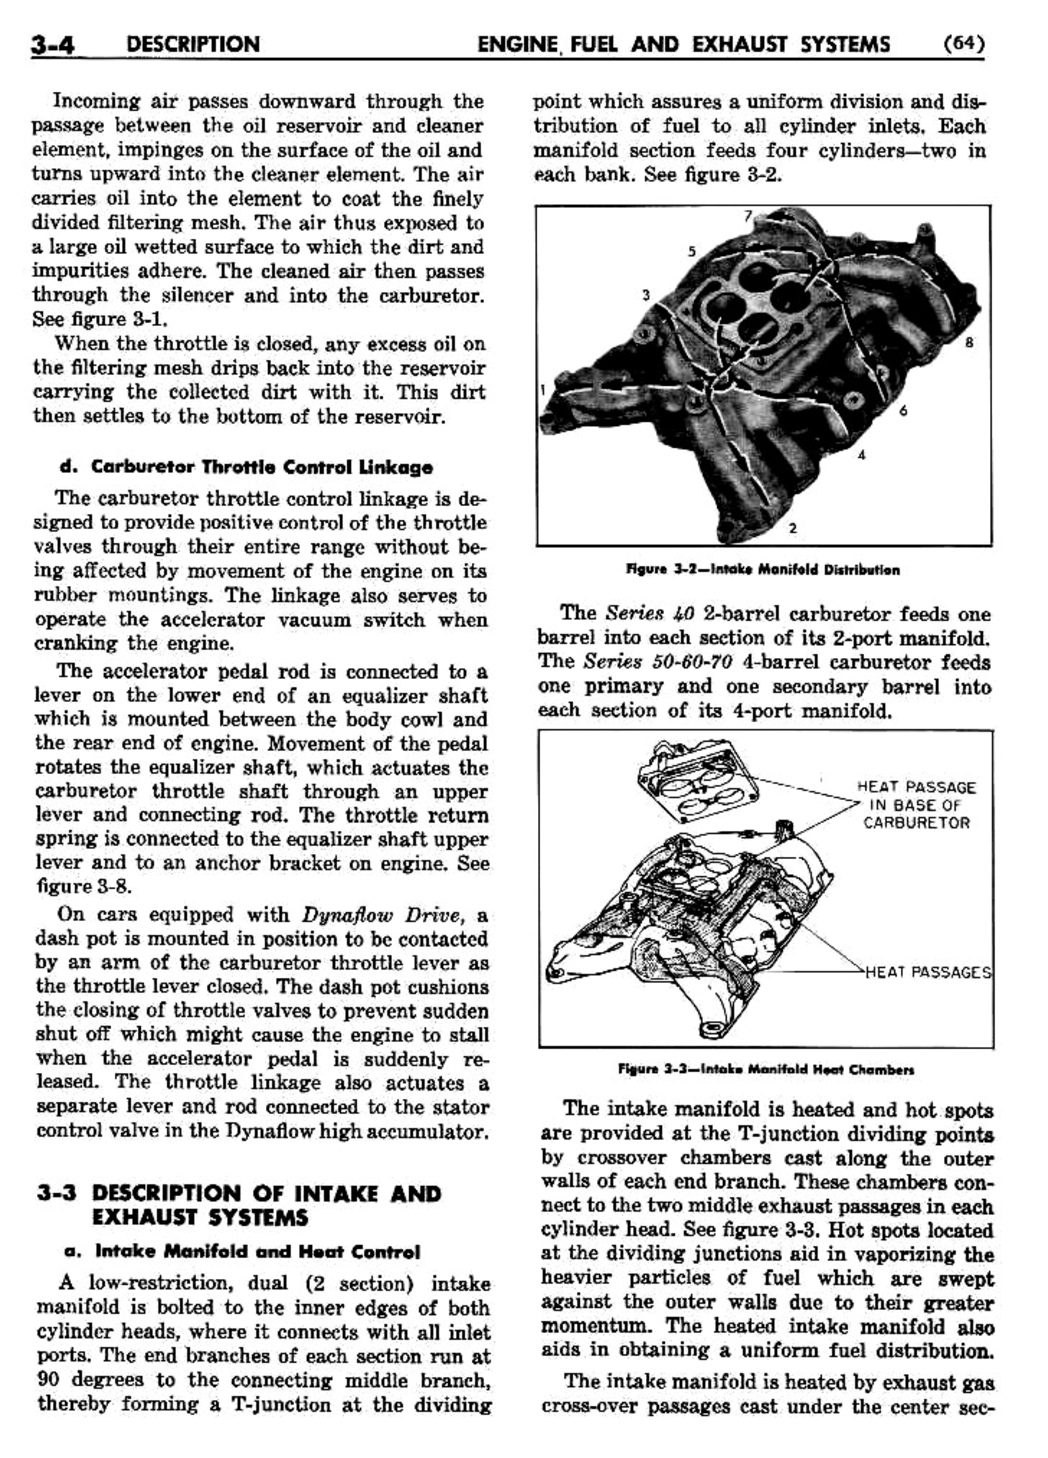 n_04 1956 Buick Shop Manual - Engine Fuel & Exhaust-004-004.jpg